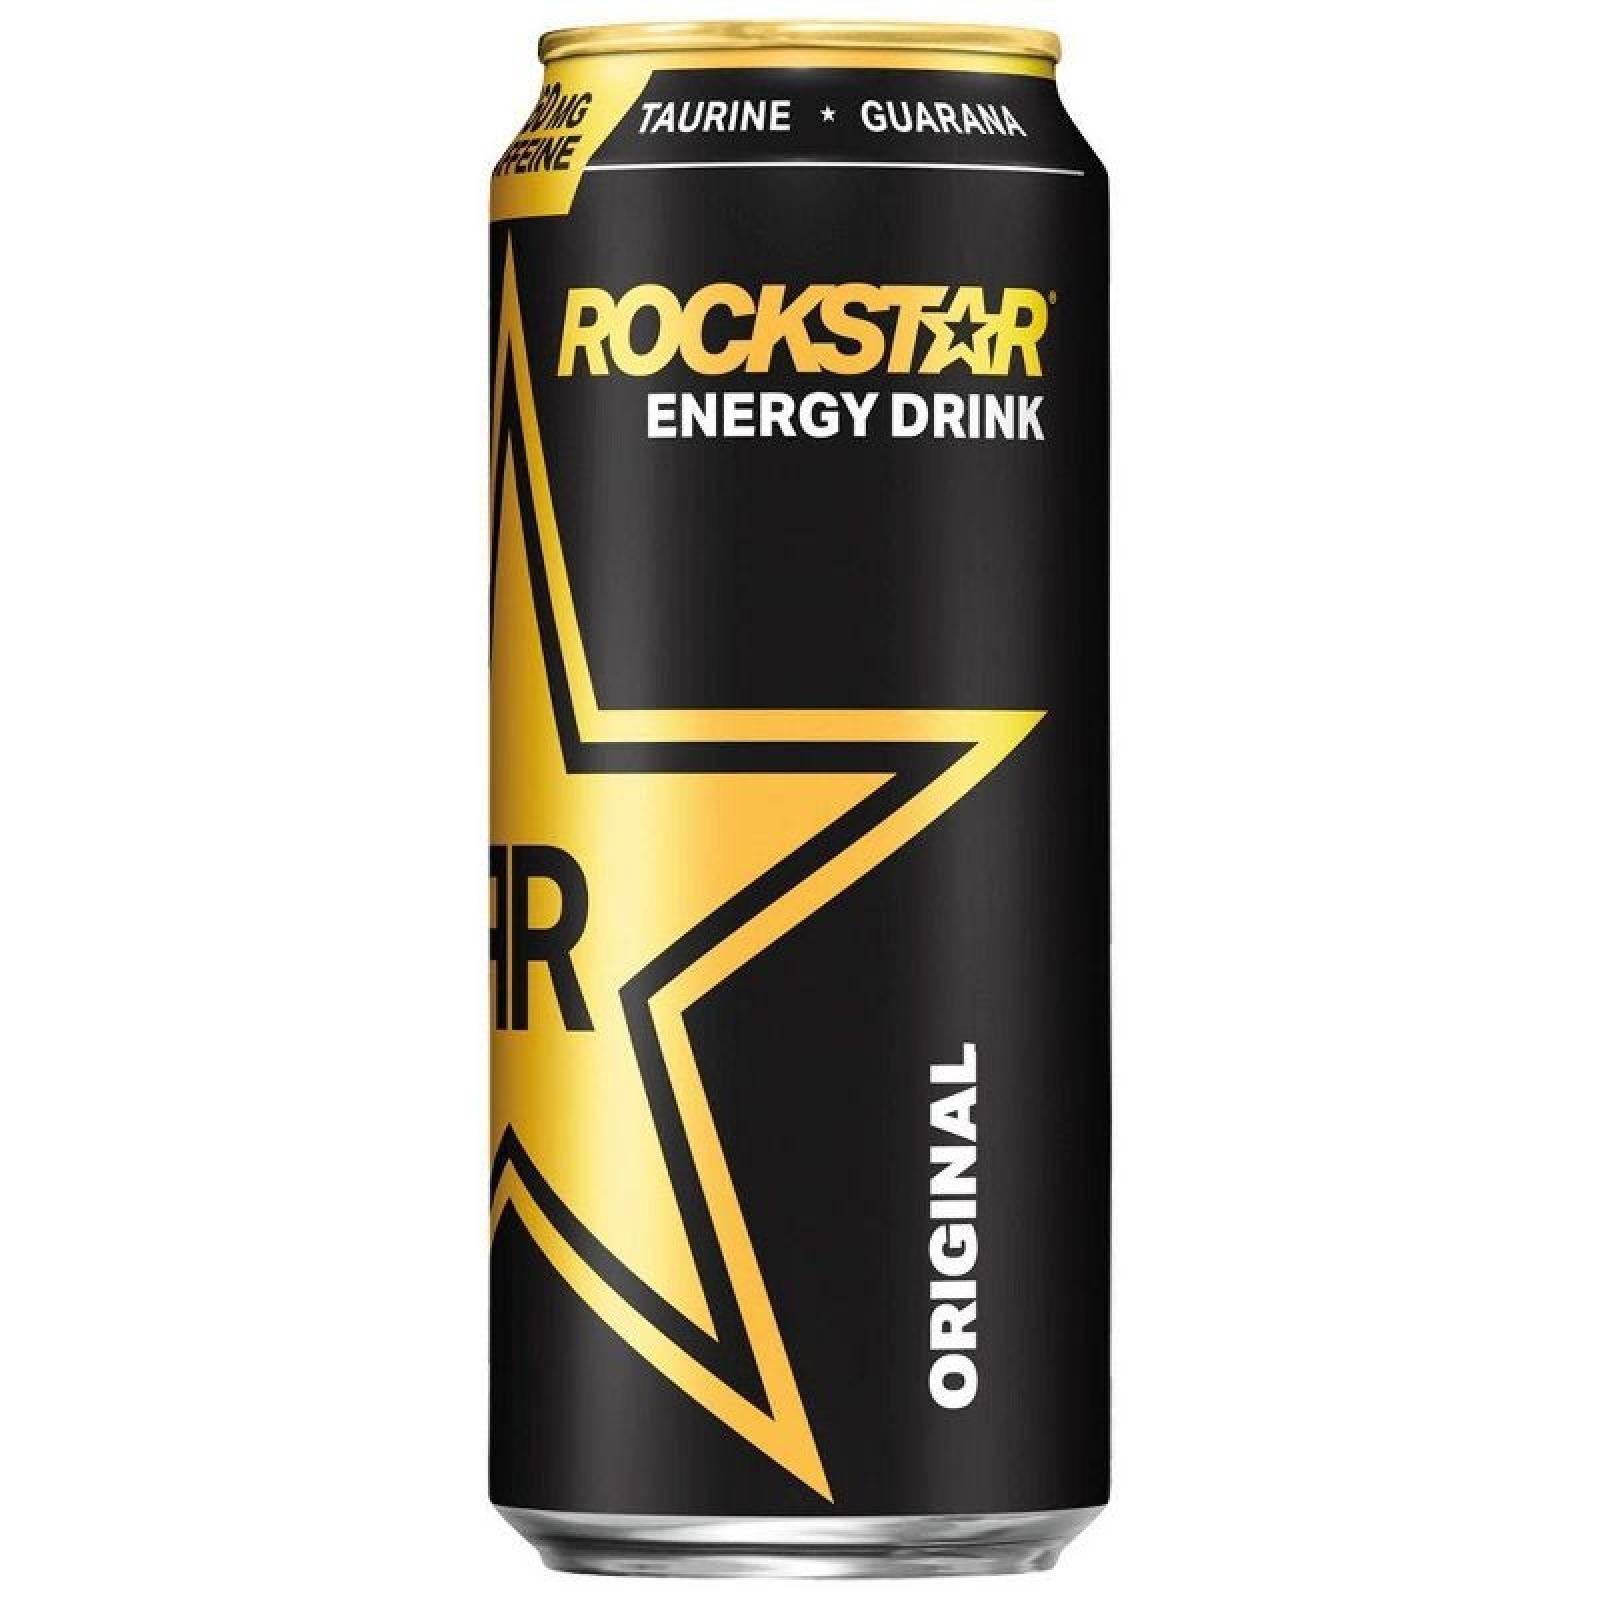 Rockstar Original Energy Drink